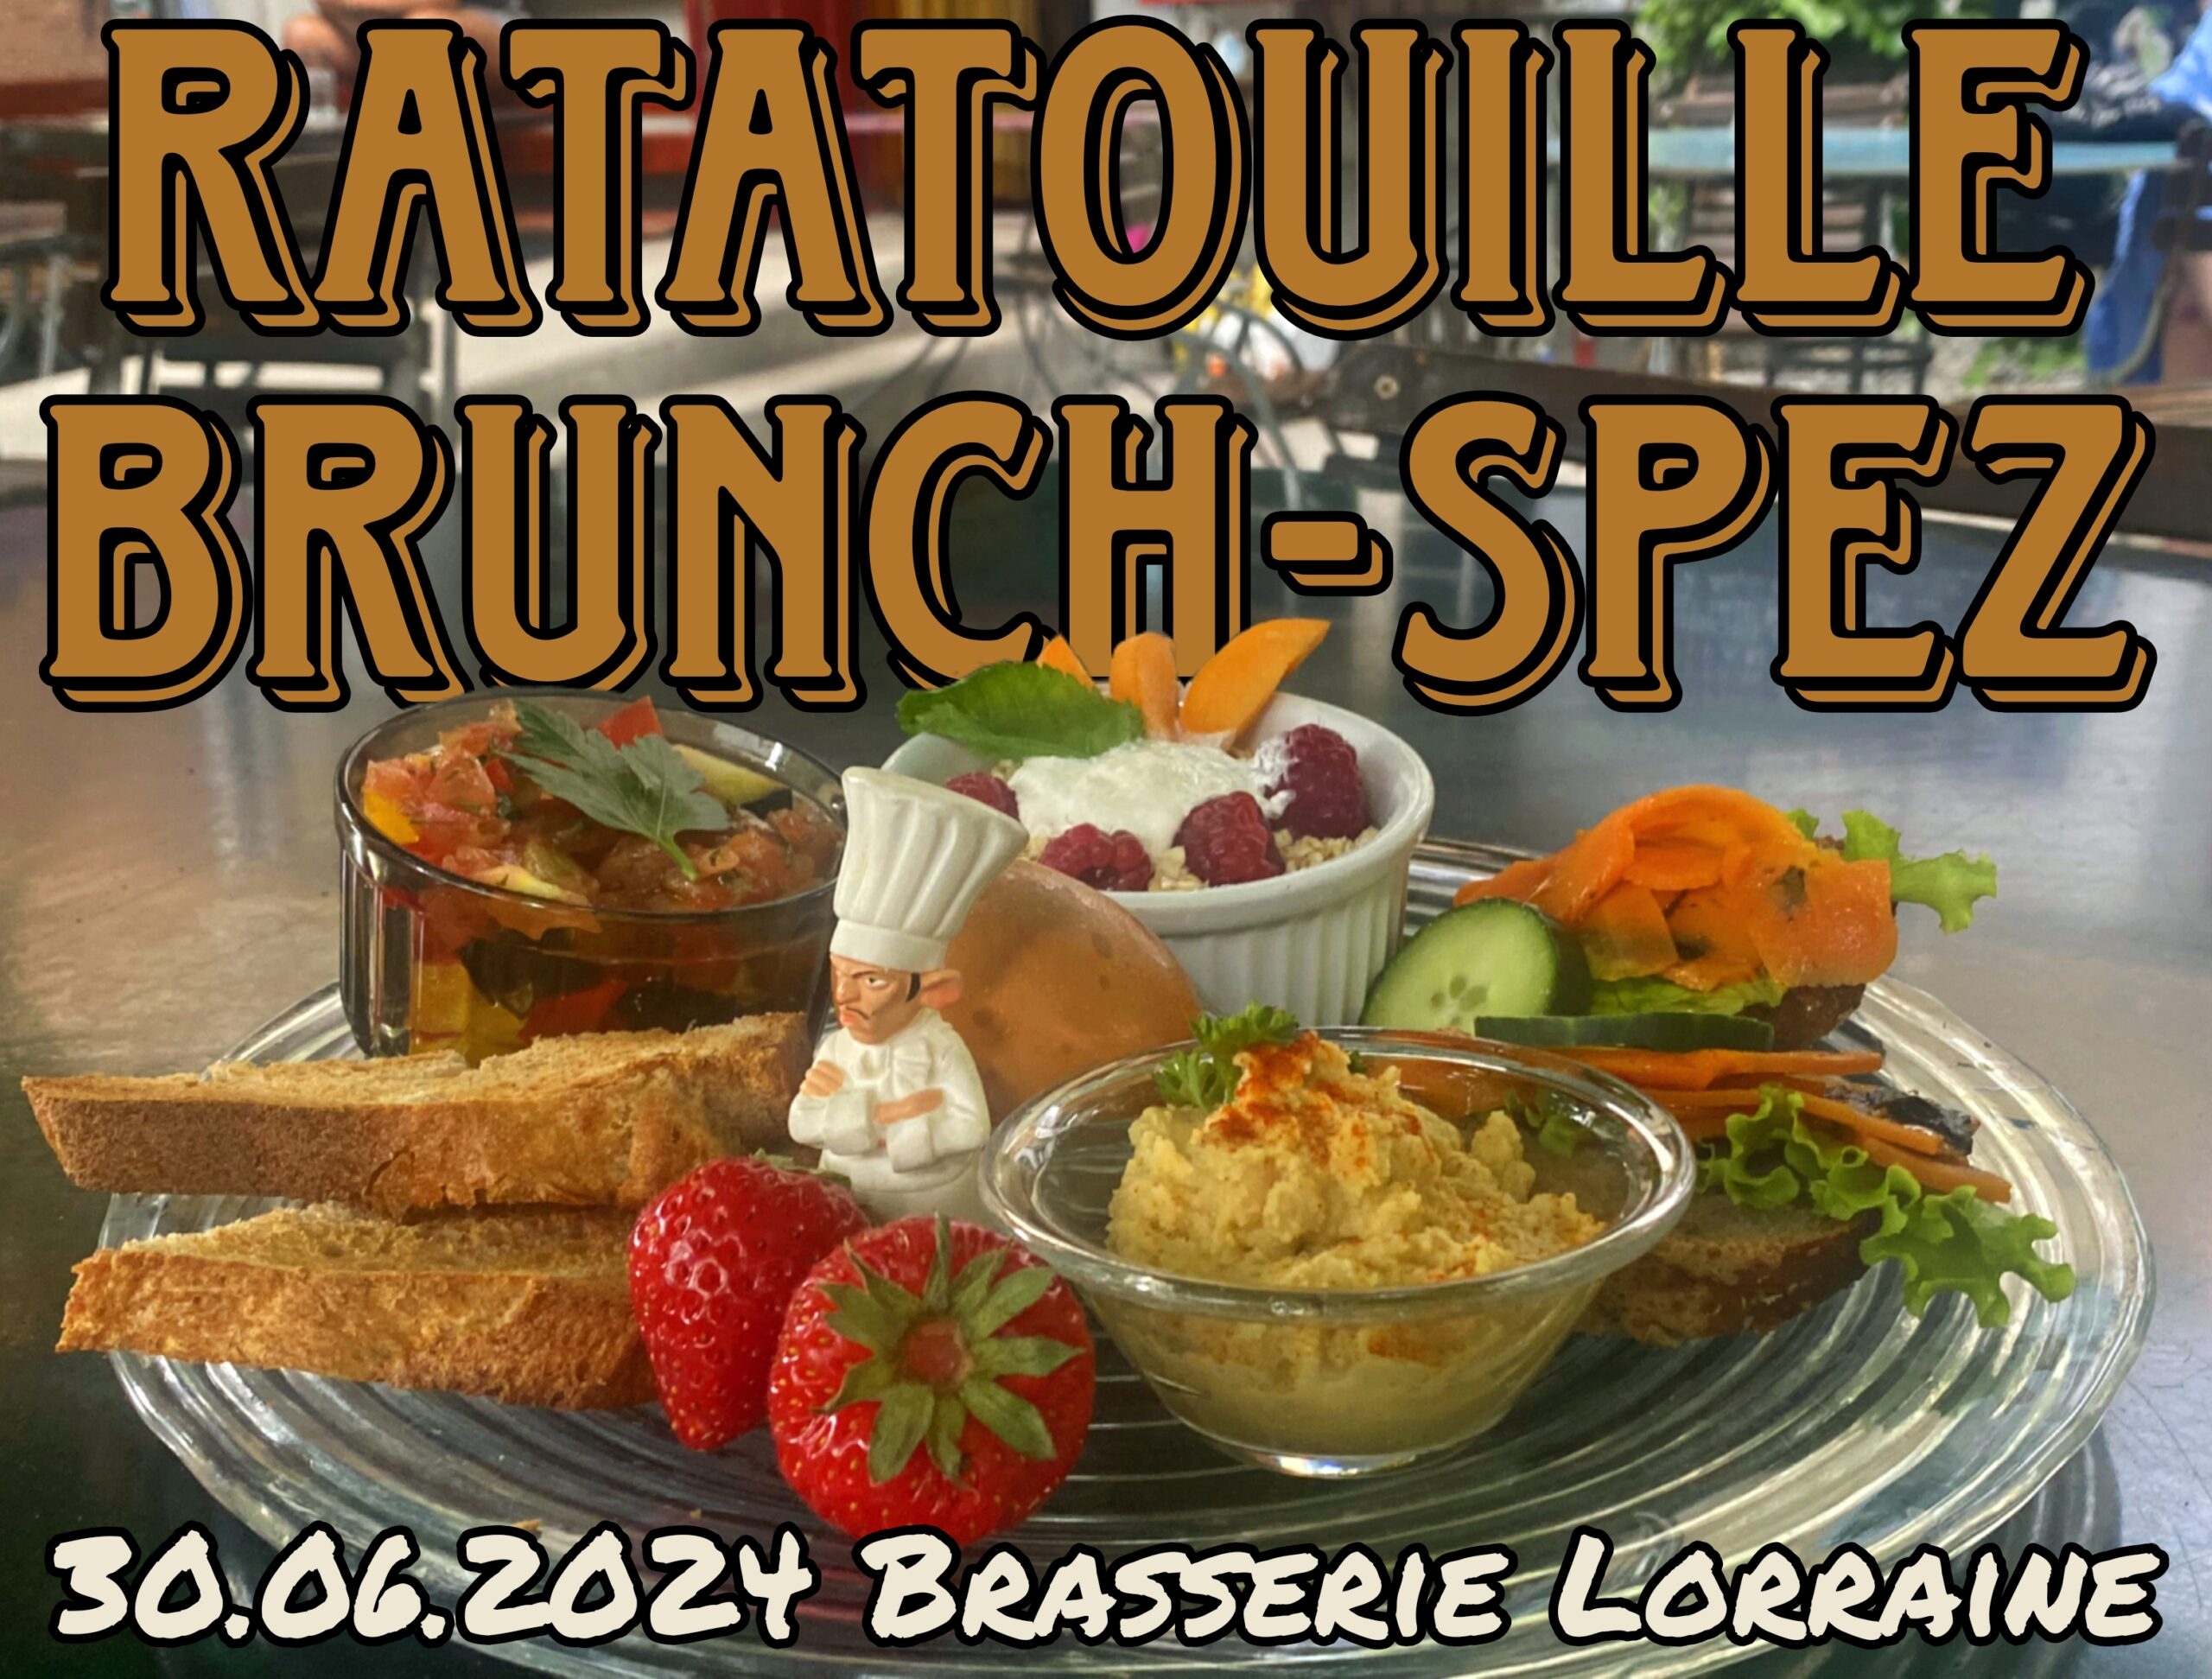 Ratatouille Brunch Spez, 30.06.2024 Brasserie Lorraine Bern